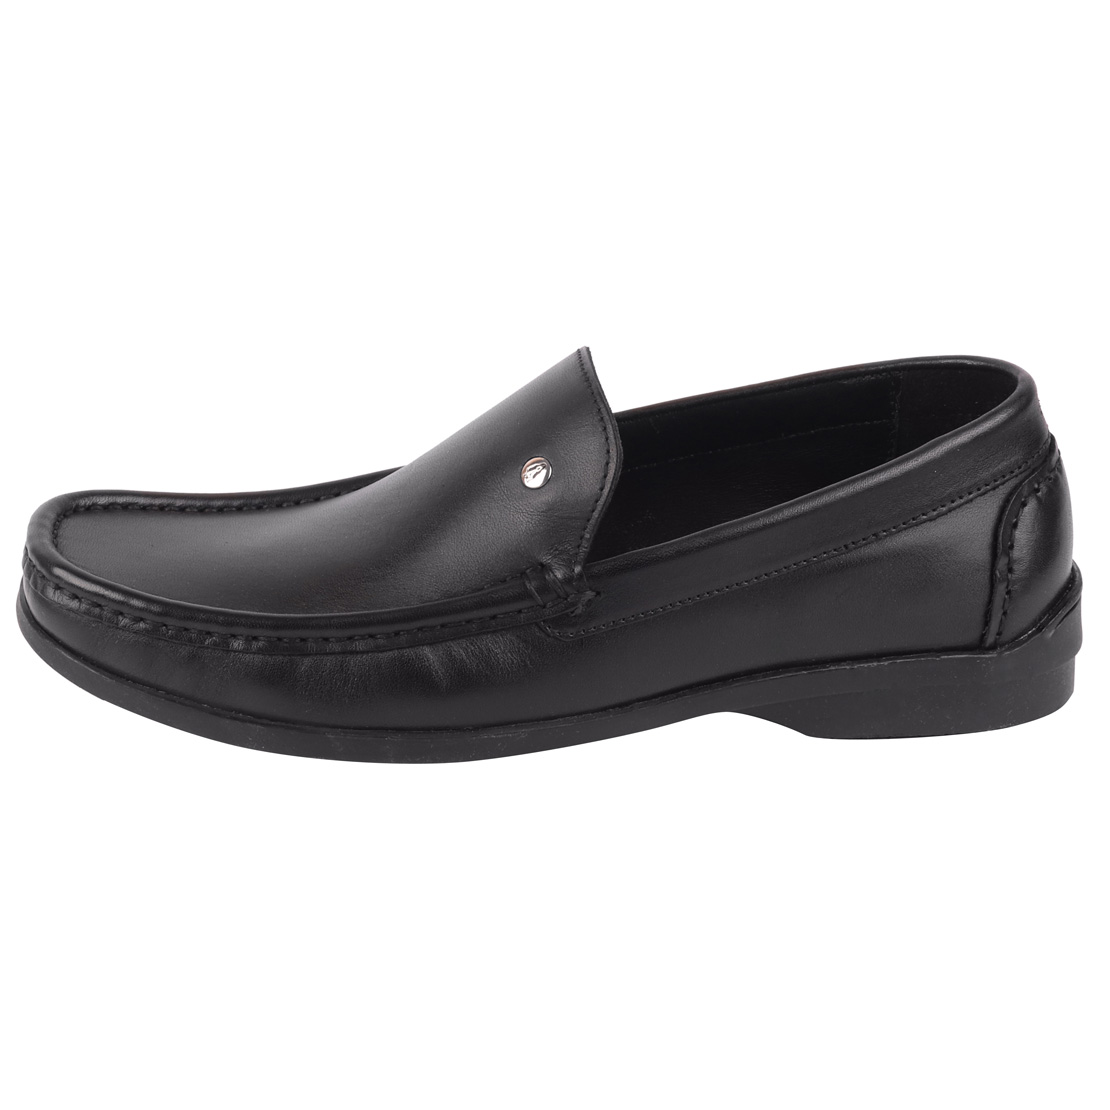 Buy Hush Puppies Men's Premium Leather Black Formal Slip On Shoes ...